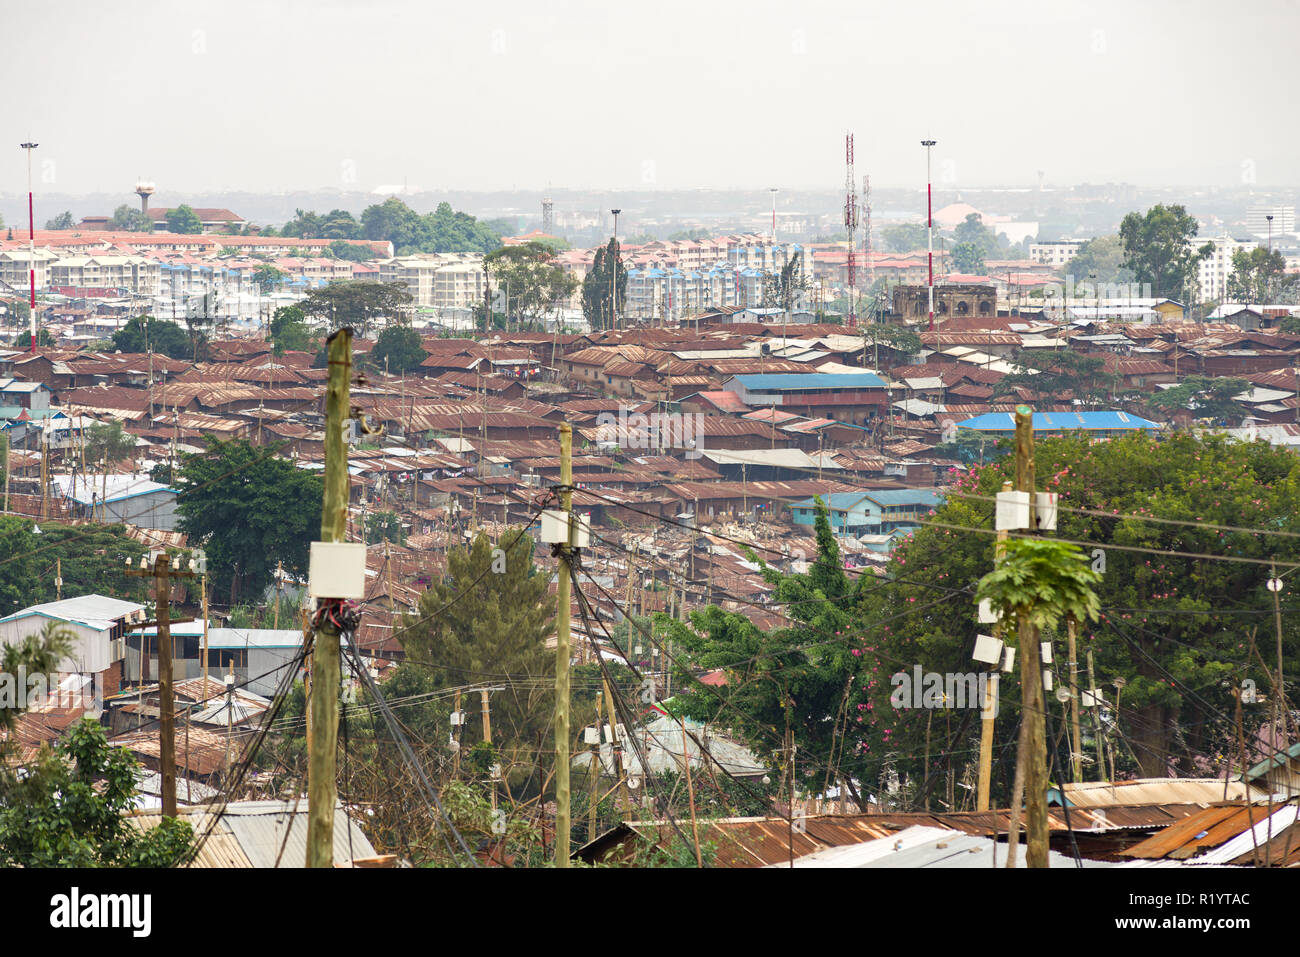 View across the roofs of Kibera slum and Nairobi city in the background, Kenya Stock Photo